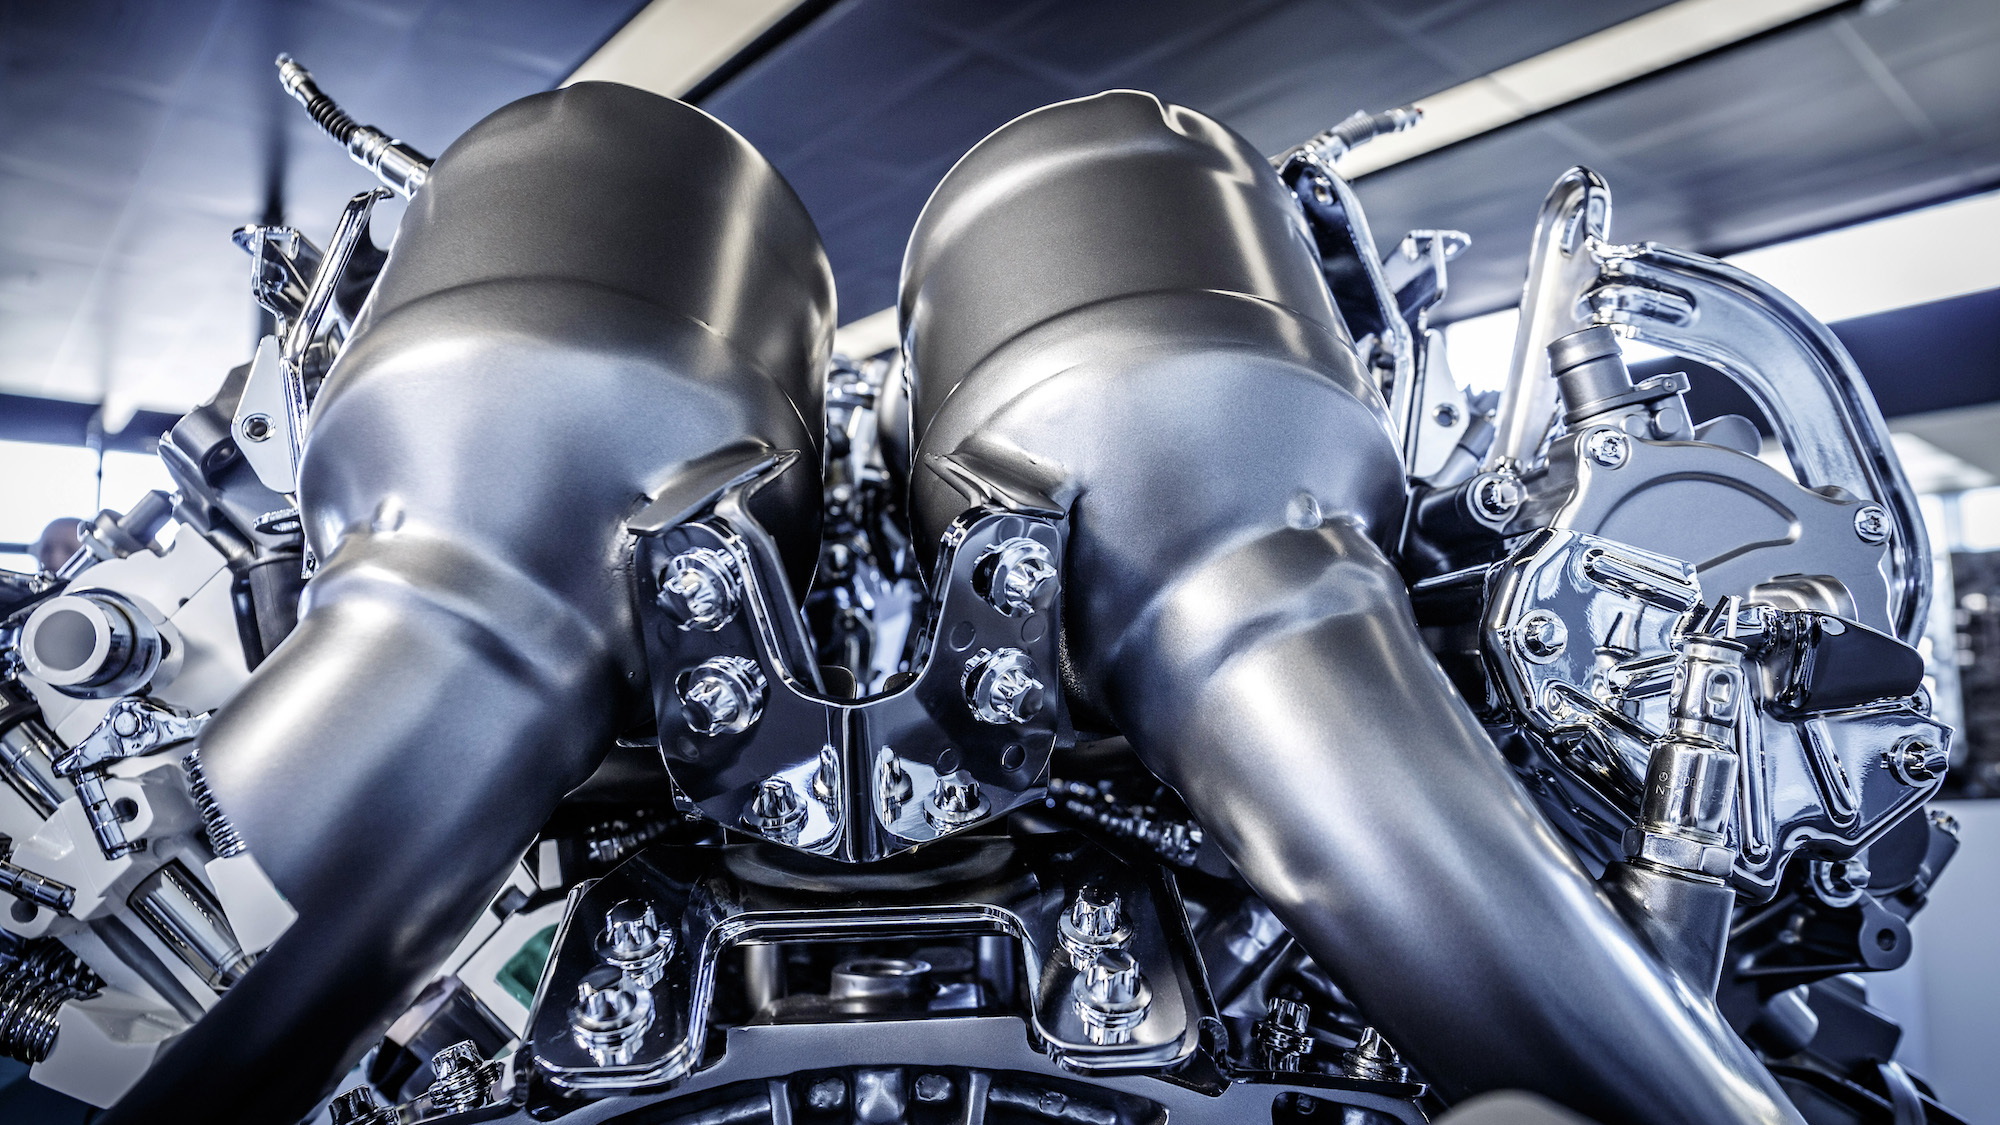 Mercedes-AMG M178 twin-turbo V-8 engine